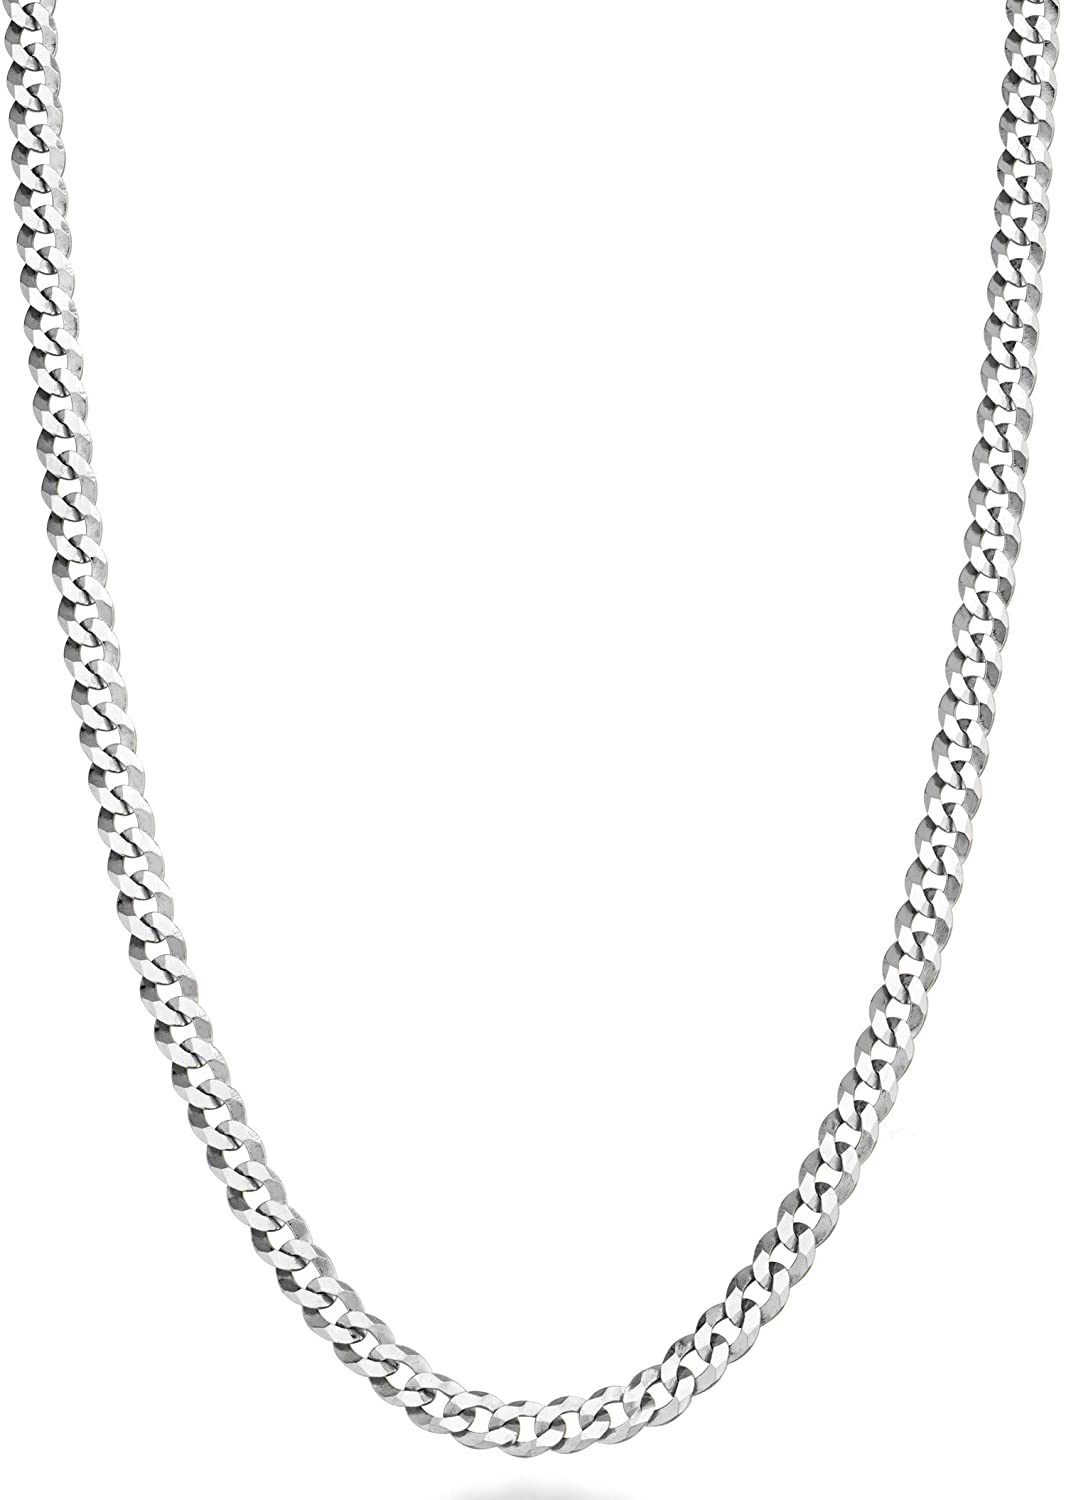 Miabella Solid 925 Sterling Silver Italian 3.5Mm Diamond Cut Cuban Link Curb Chain Necklace for Women Men 